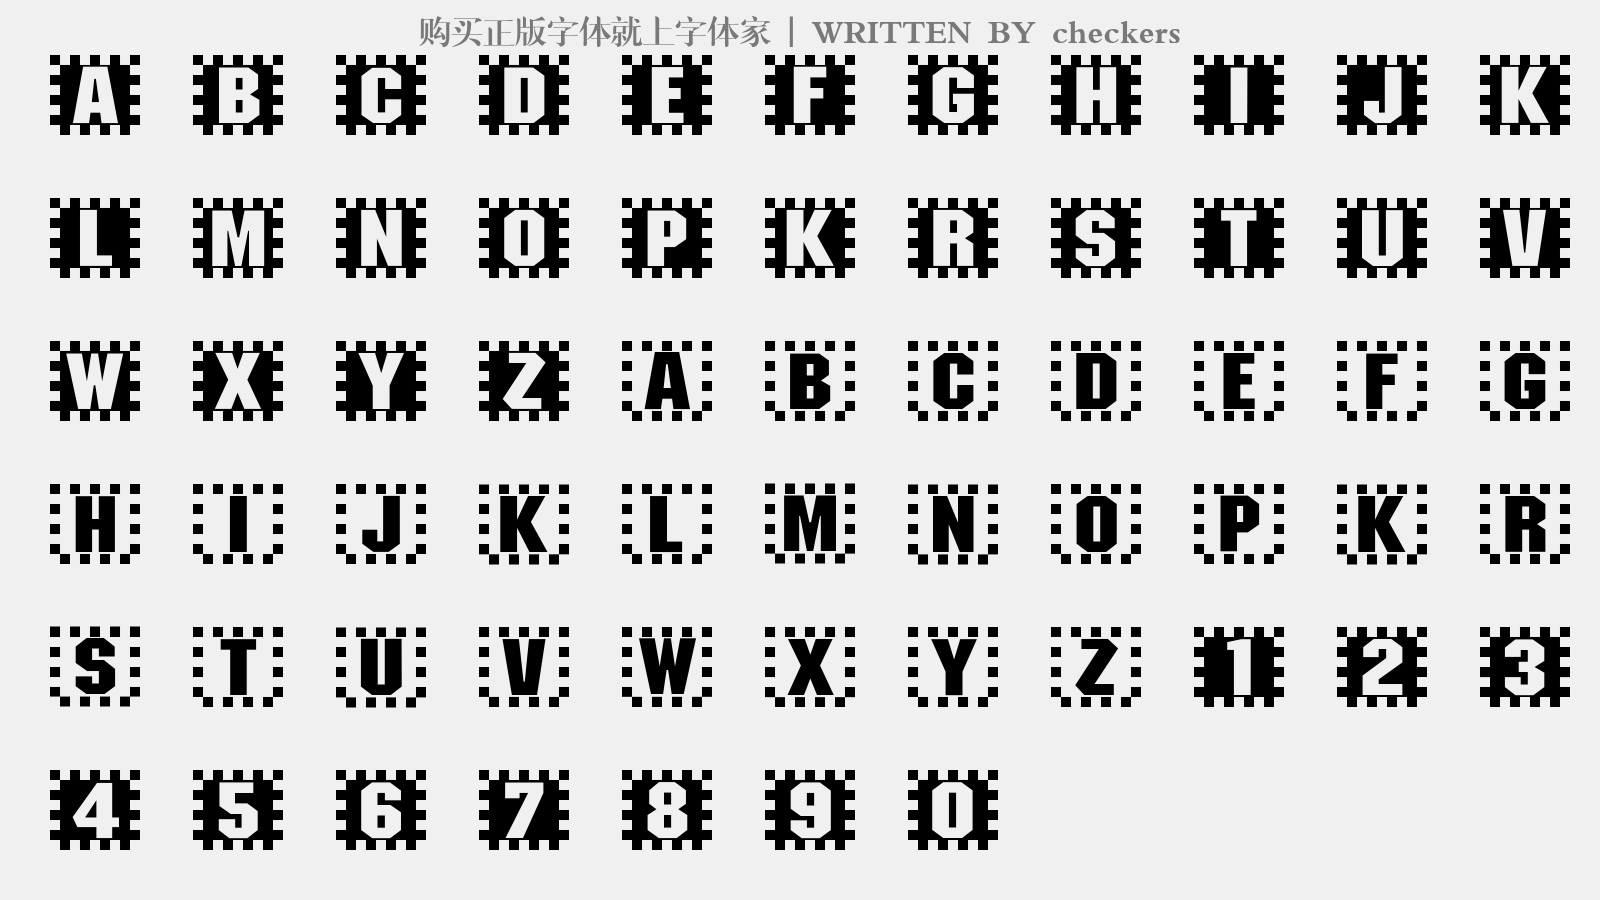 checkers - 大写字母/小写字母/数字